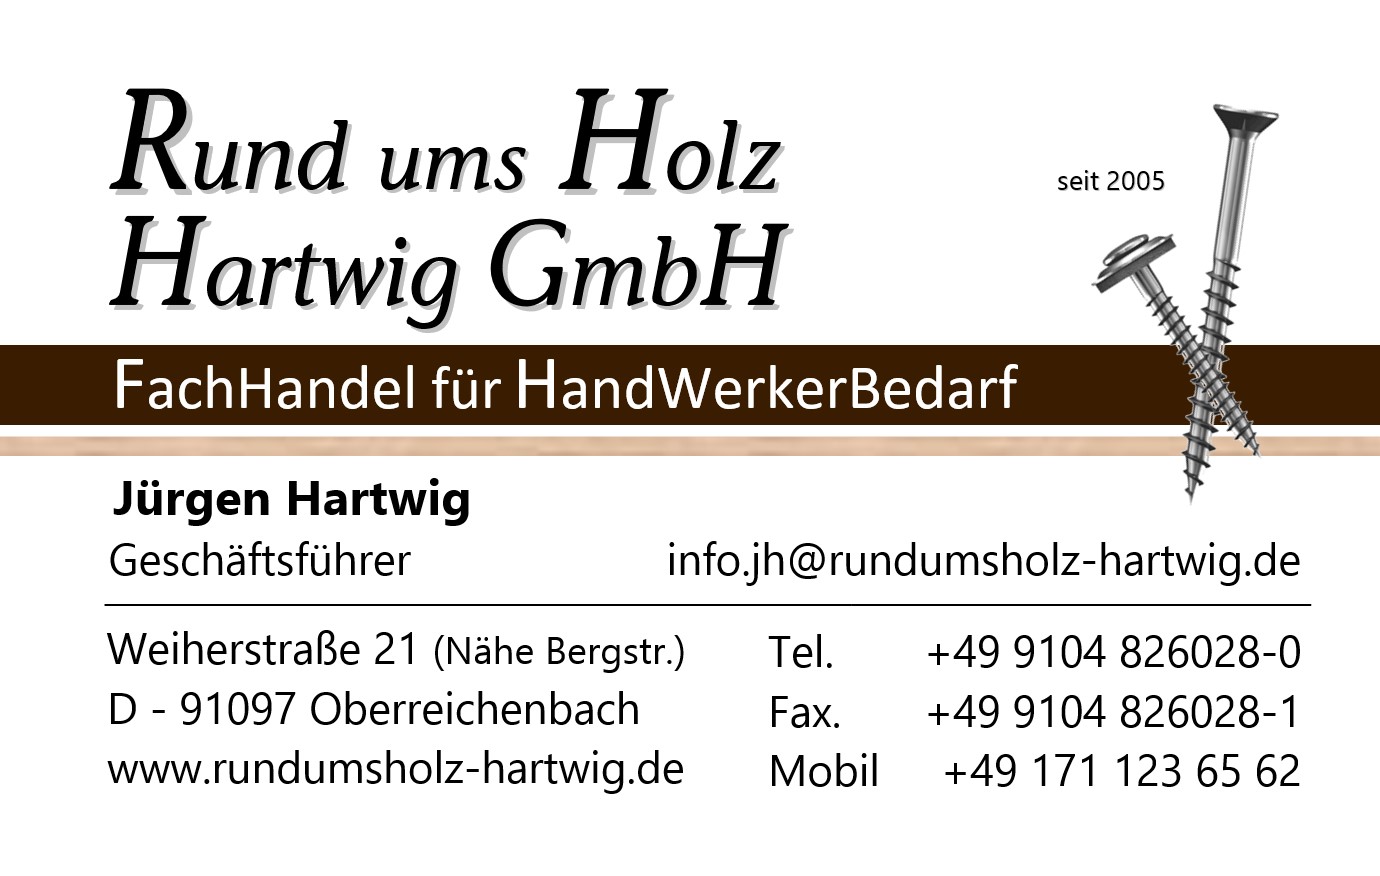 Rund ums Holz
Hartwig GmbH